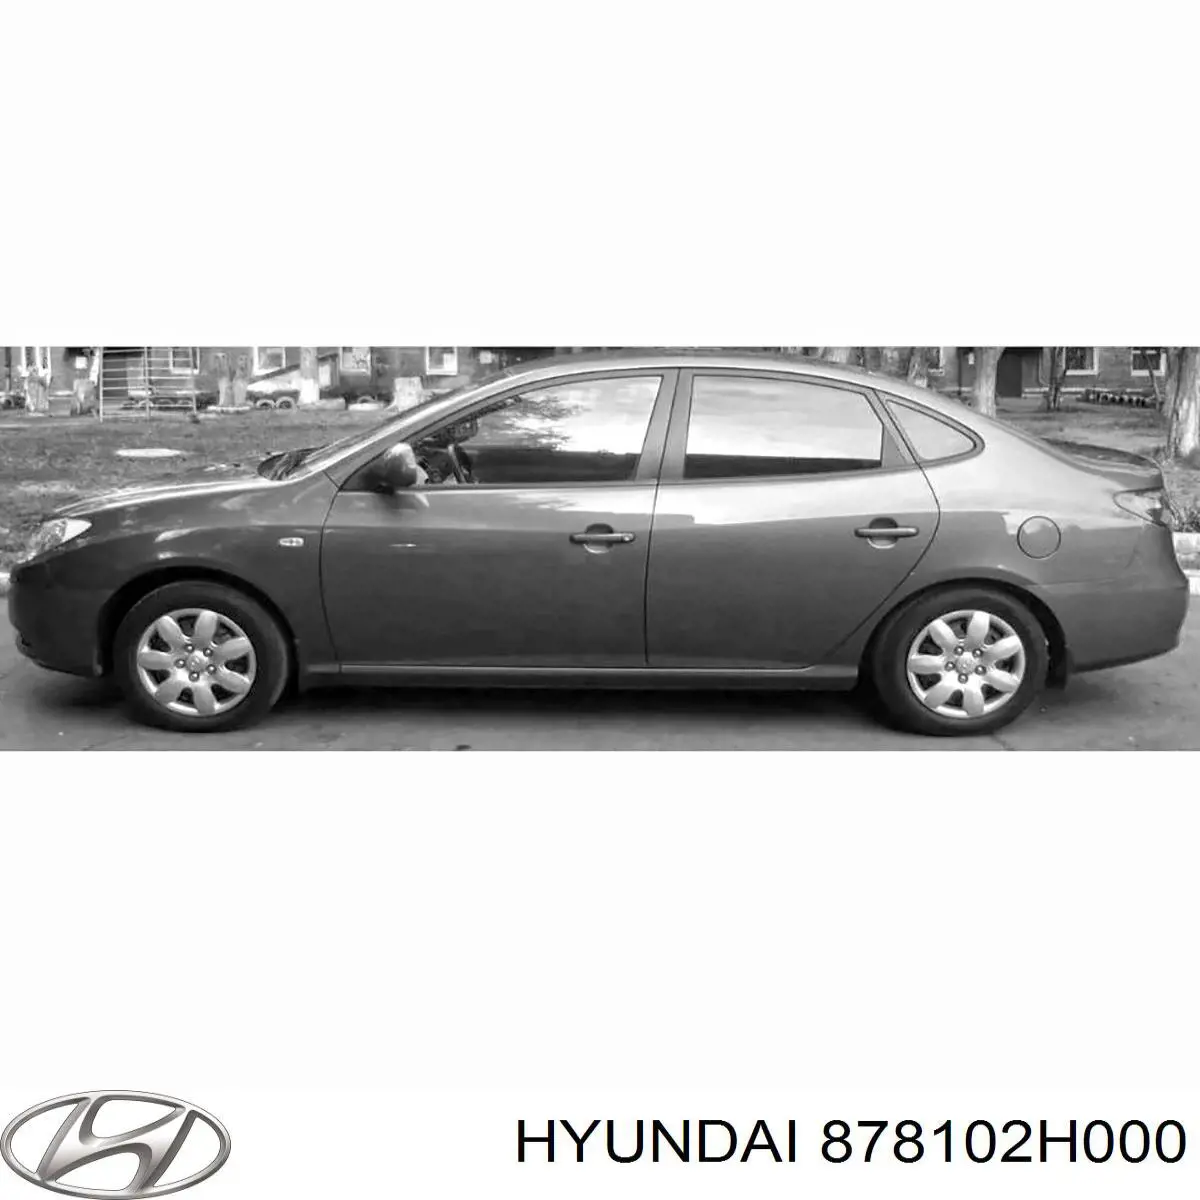 878102H000 Hyundai/Kia ventanilla costado superior izquierda (lado maletero)